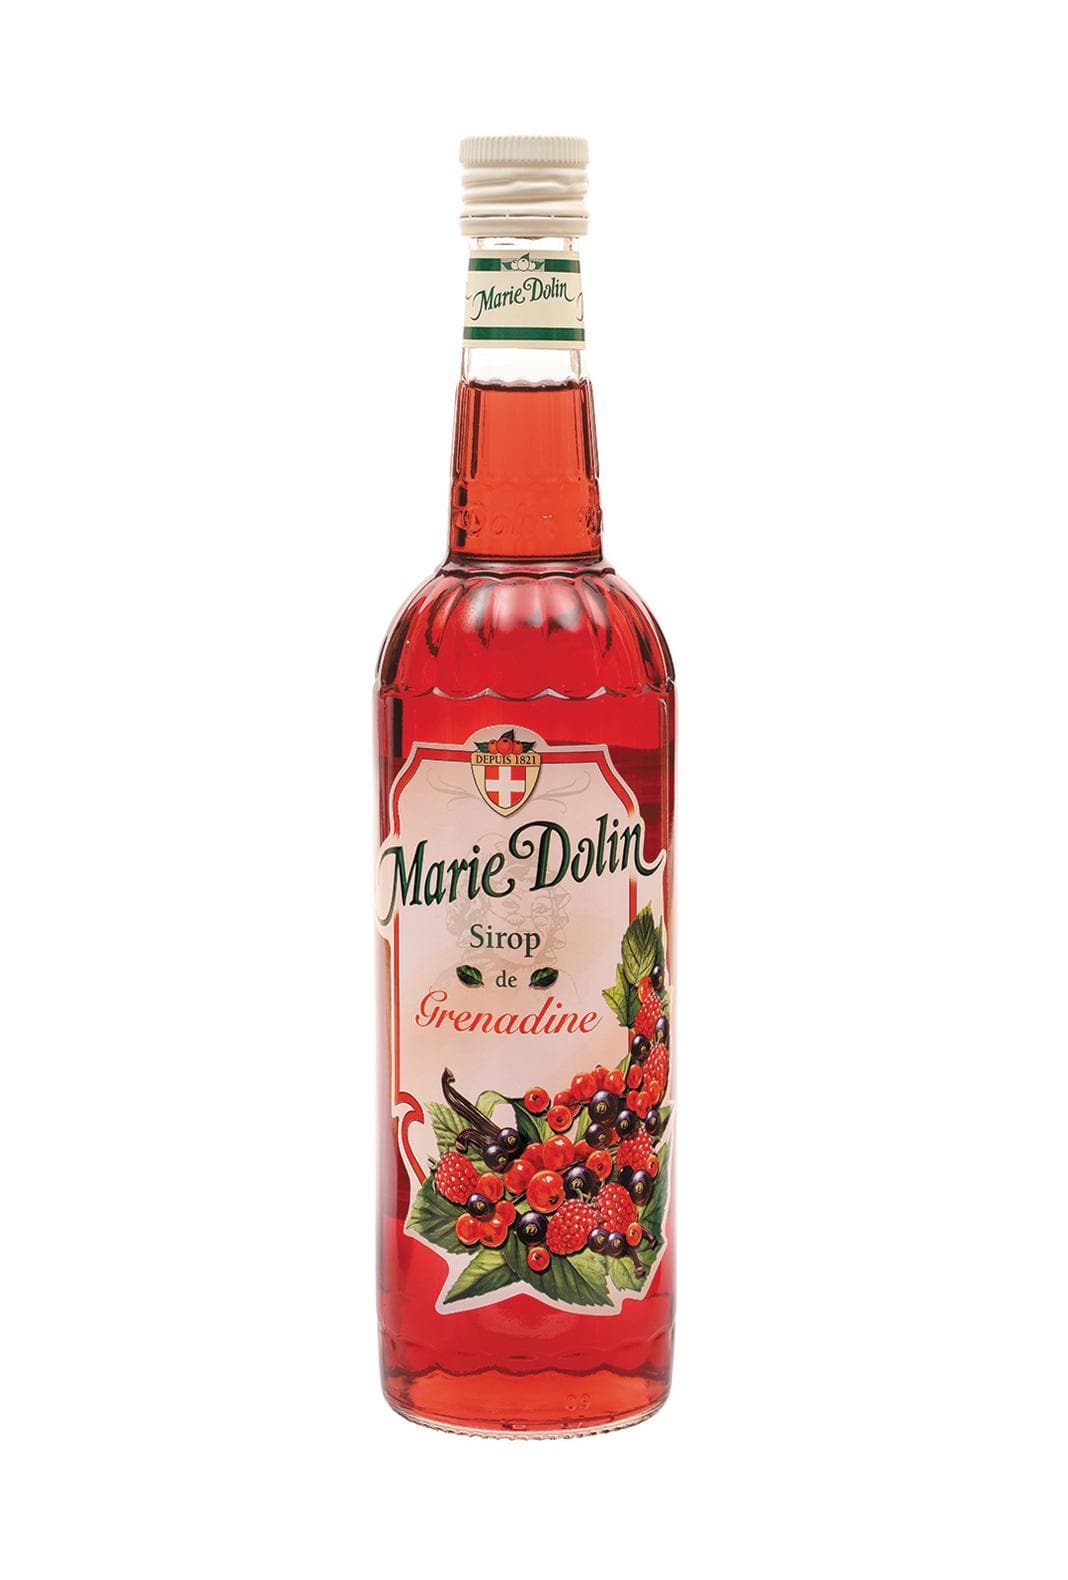 Marie Dolin Sirop de Grenadine (Pomegranate) Syrup 700ml | Syrup | Shop online at Spirits of France